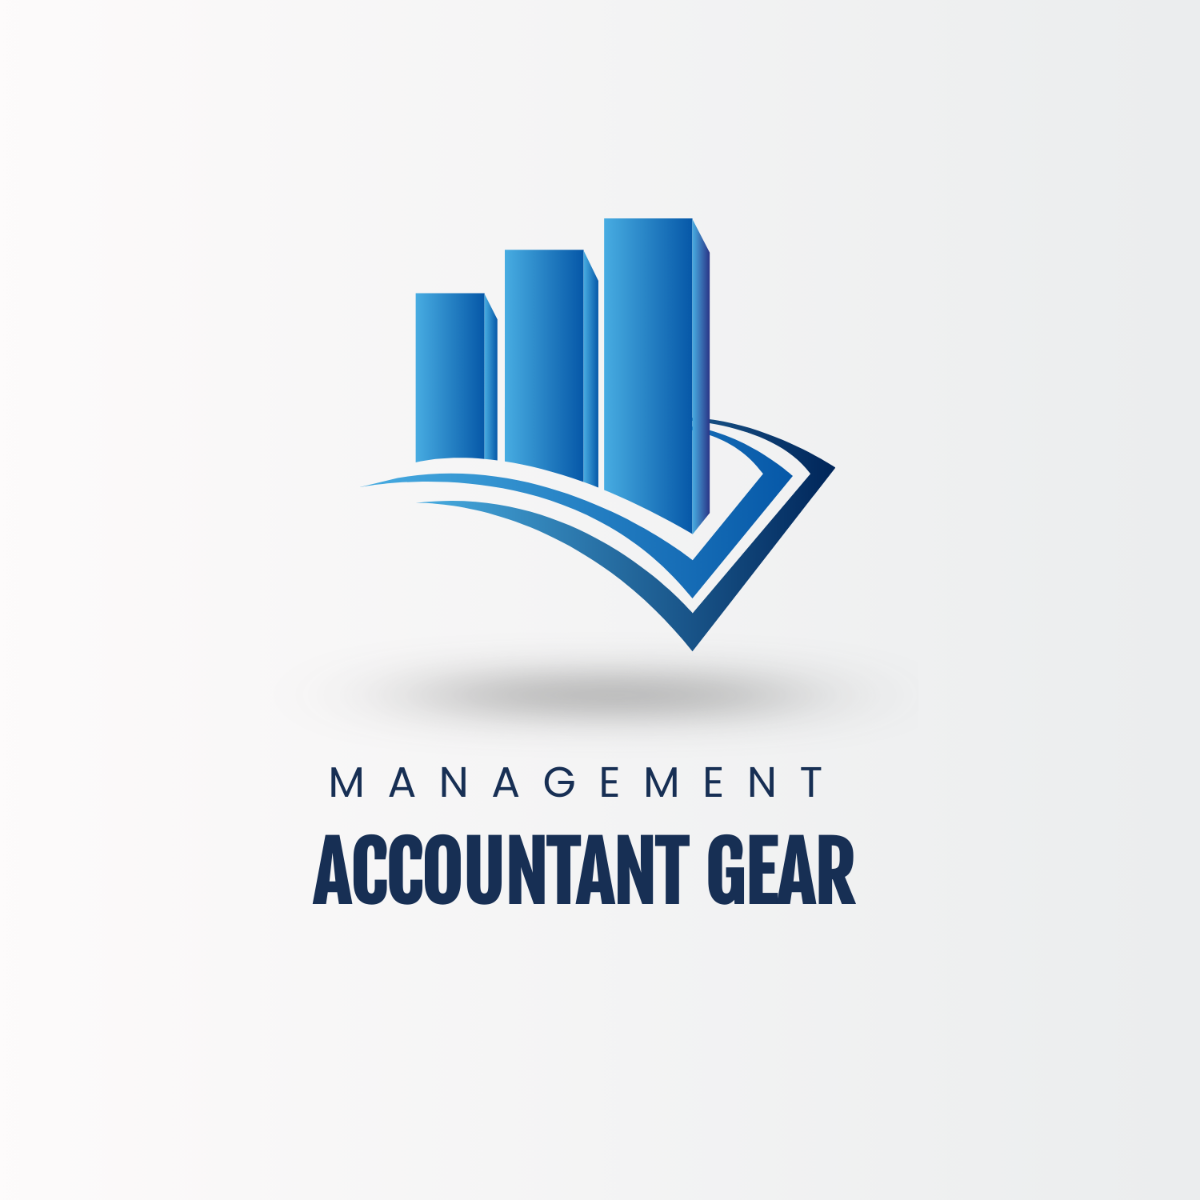 Management Accountant Gear Logo Template